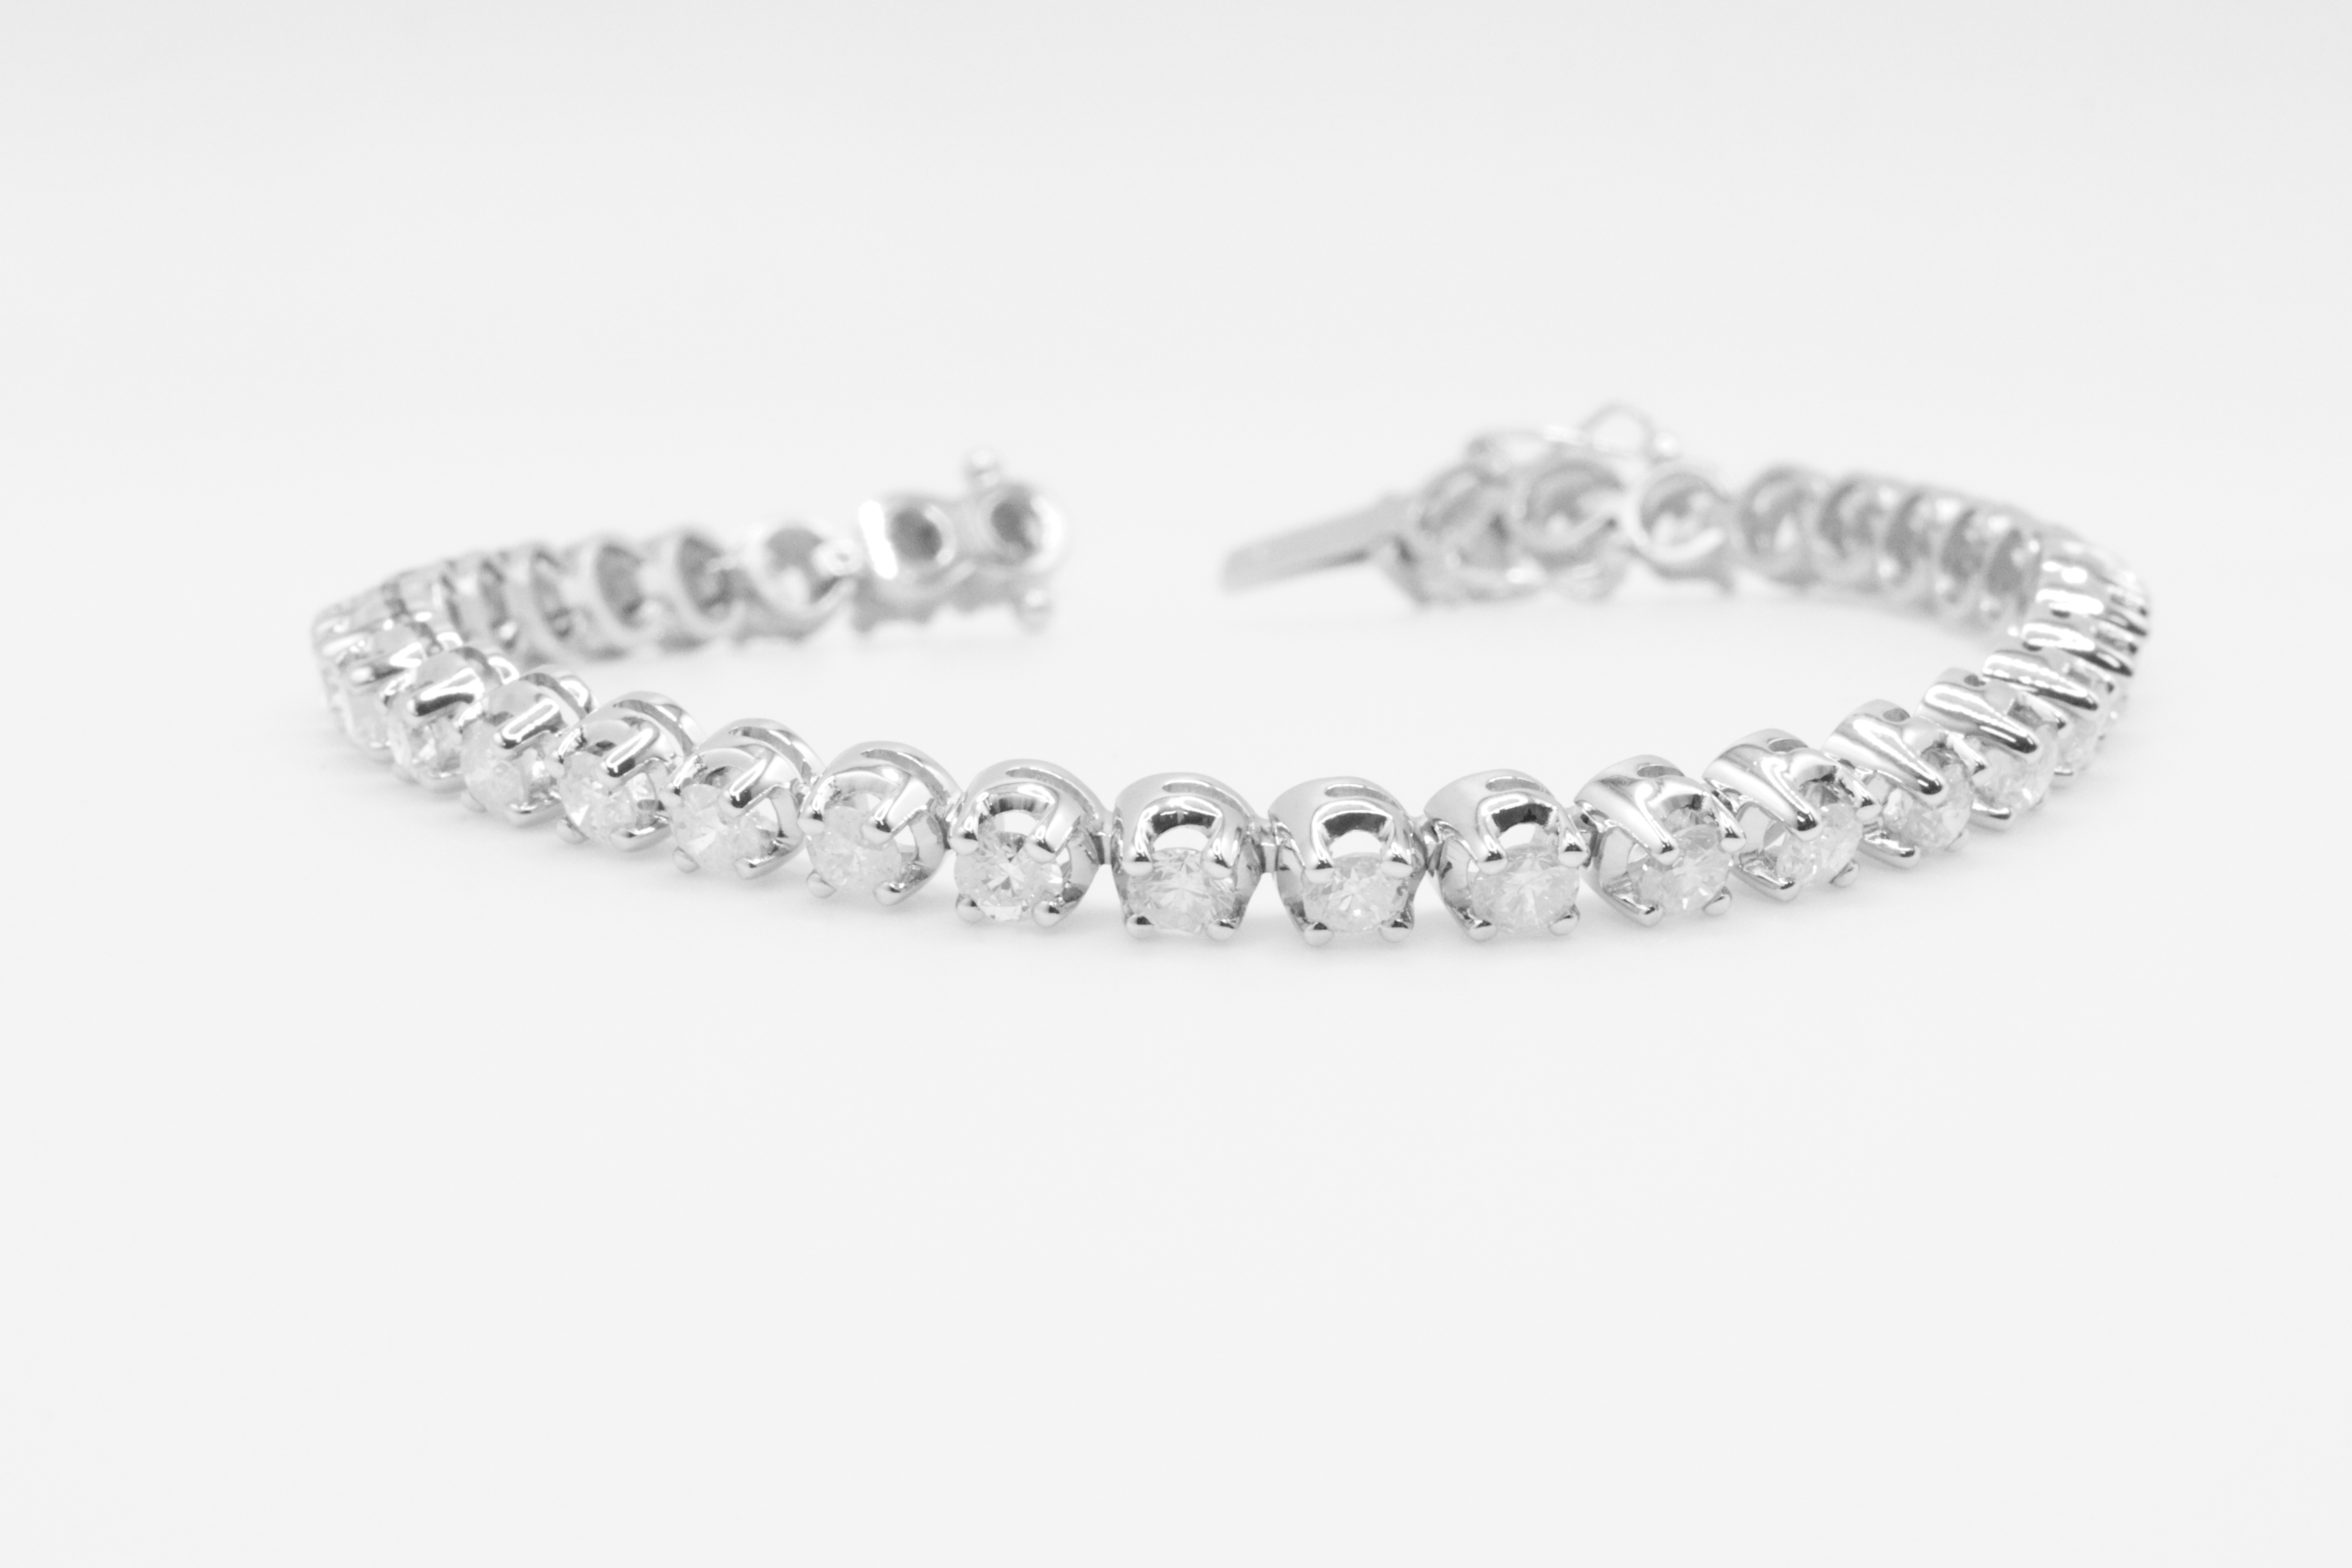 7.0 Carat 18ct White Gold Tennis Bracelet set with Round Brilliant Cut Natural Diamonds - Image 2 of 16